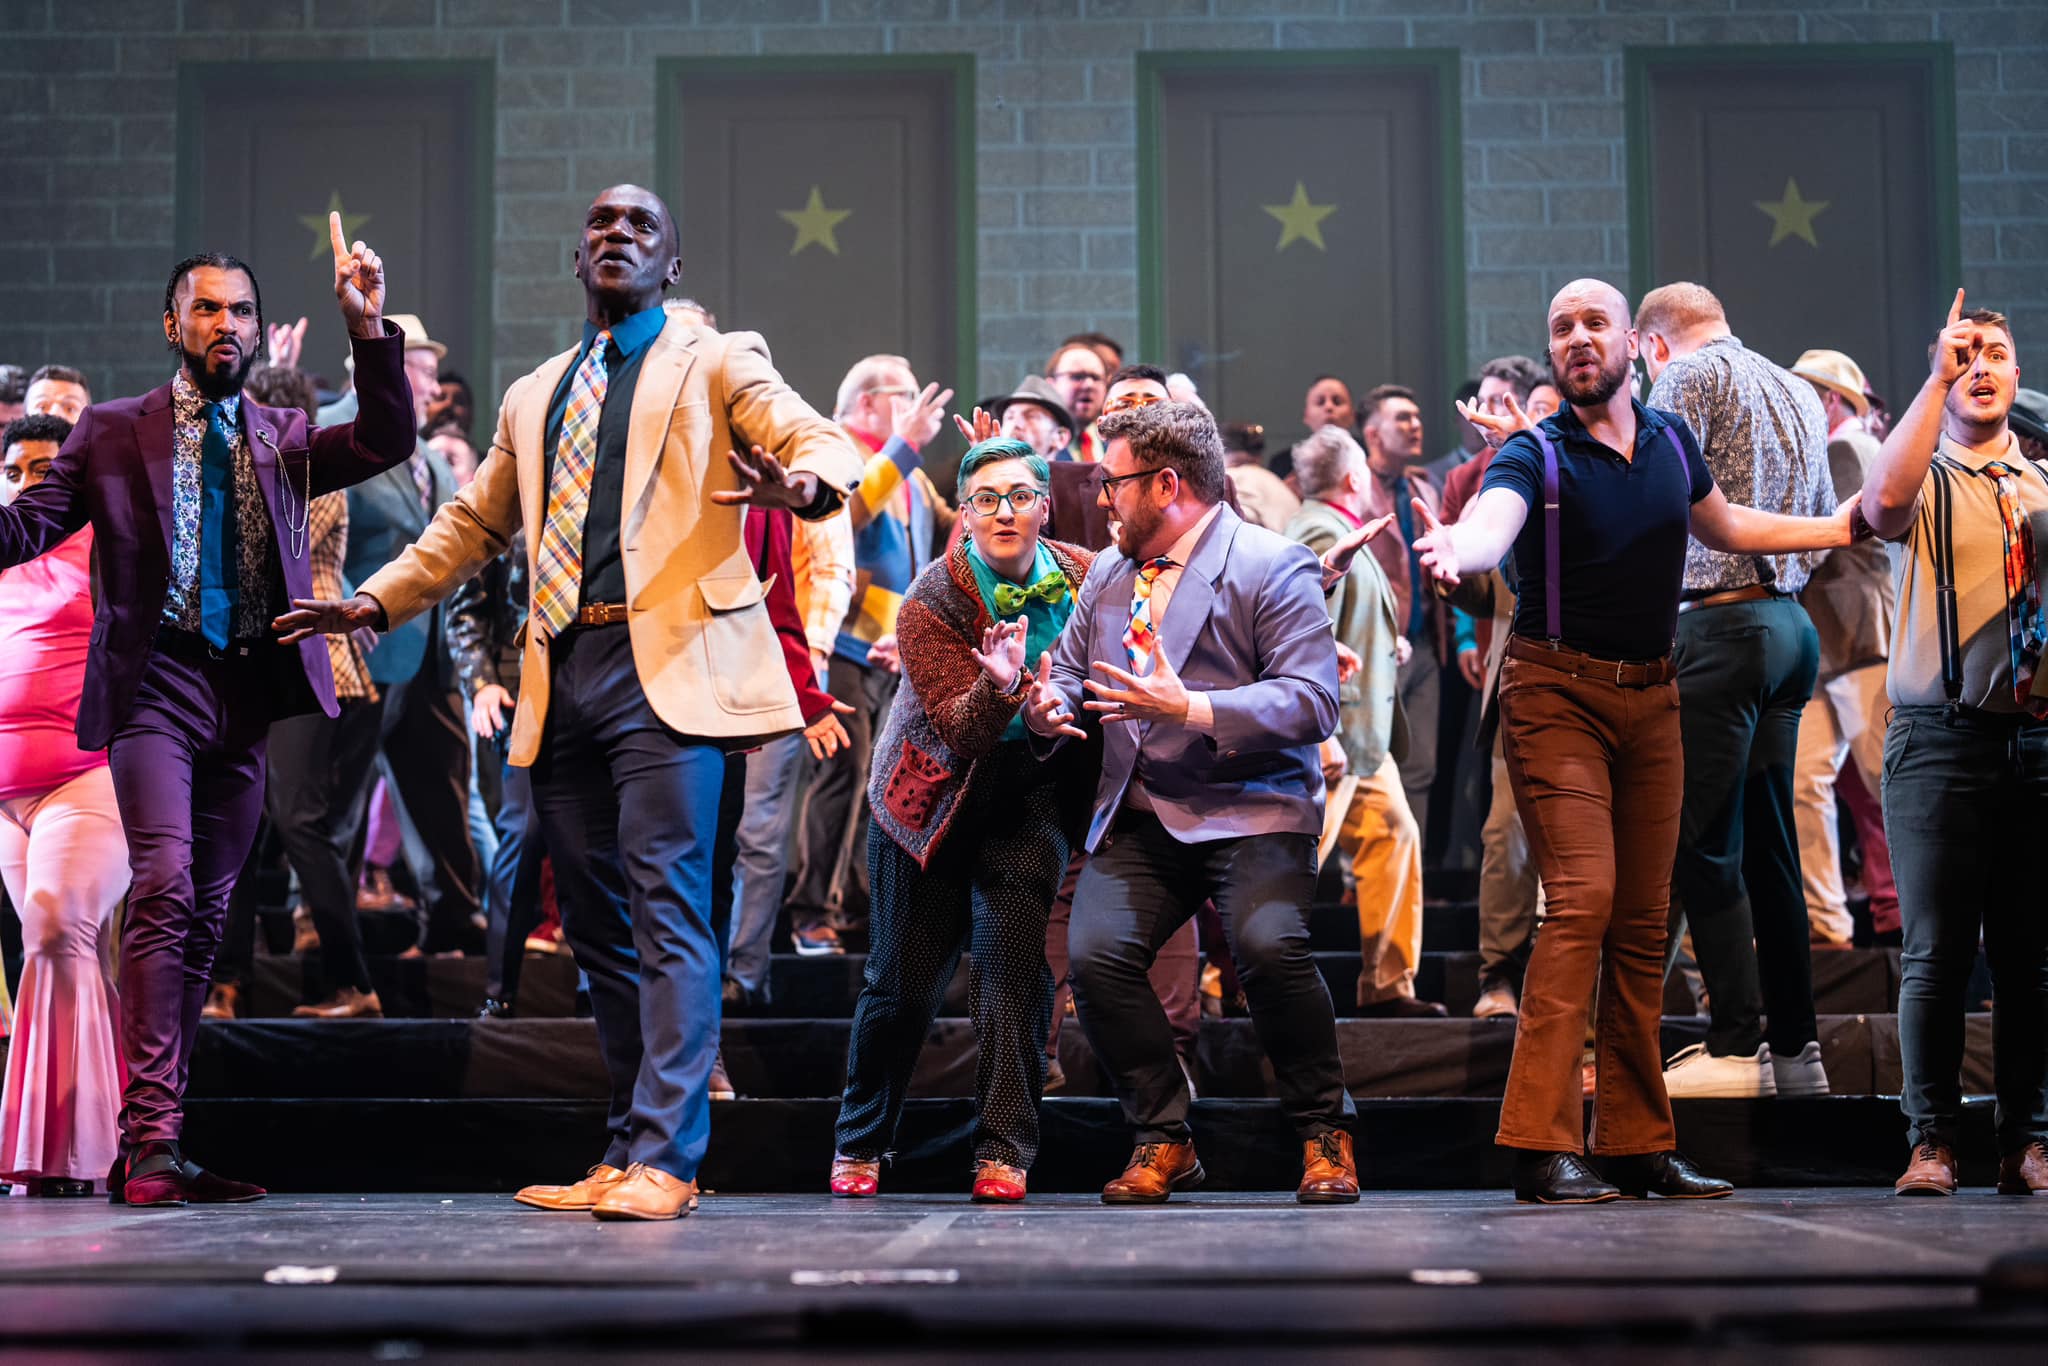 Indianapolis Men's Chorus: Harmonizing inclusivity and excellence